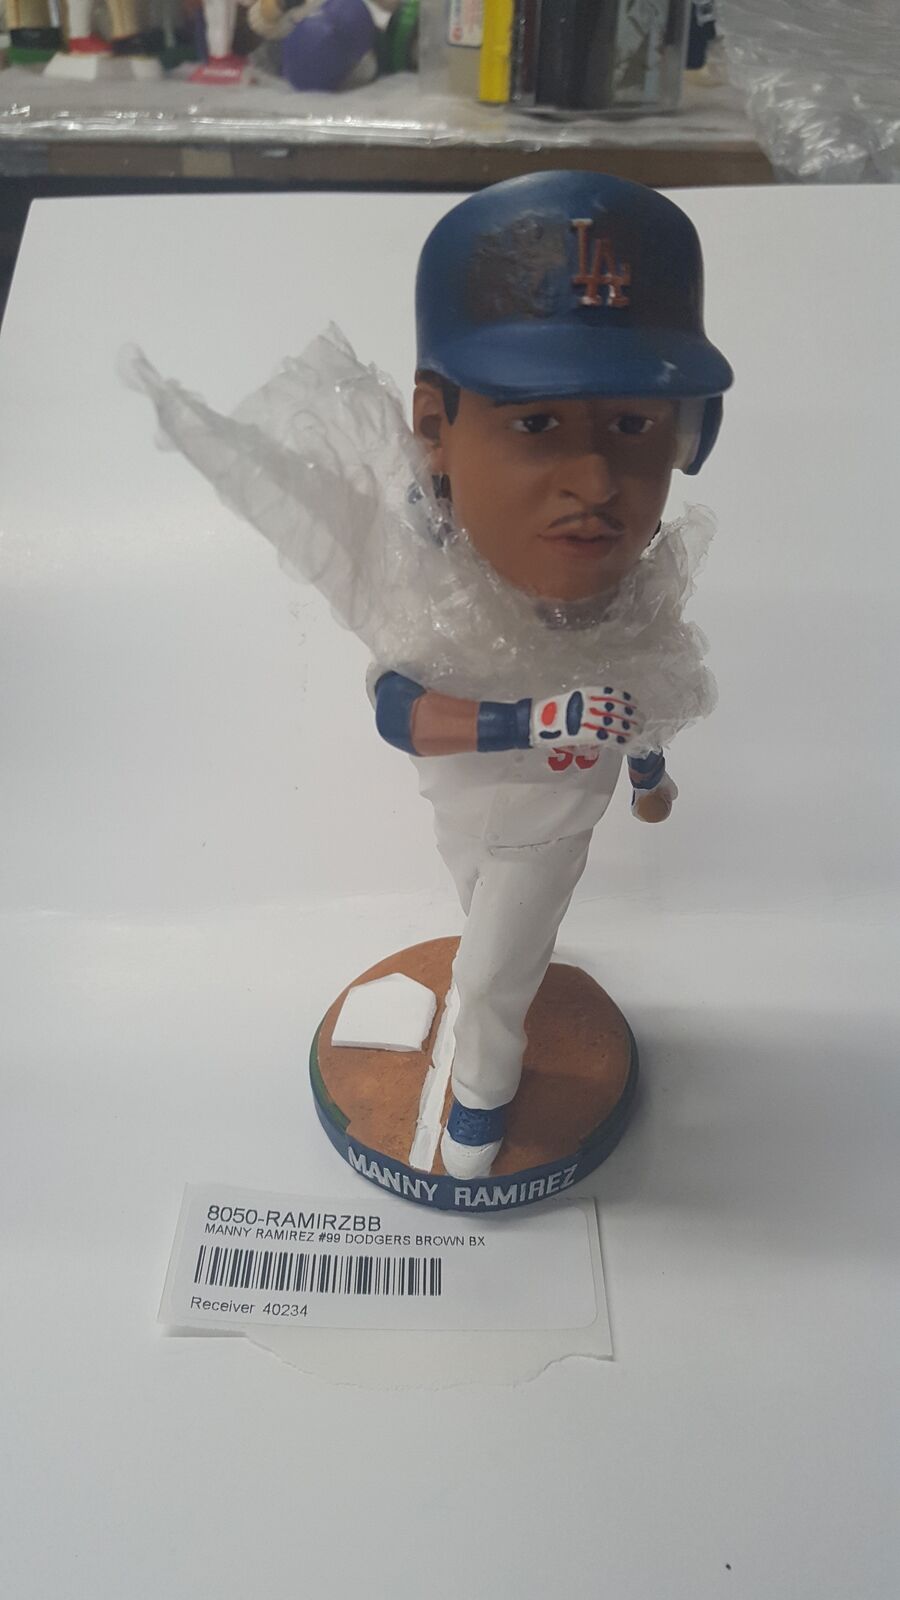 Manny Ramirez #99 Dodgers Brown Bx Bobblehead